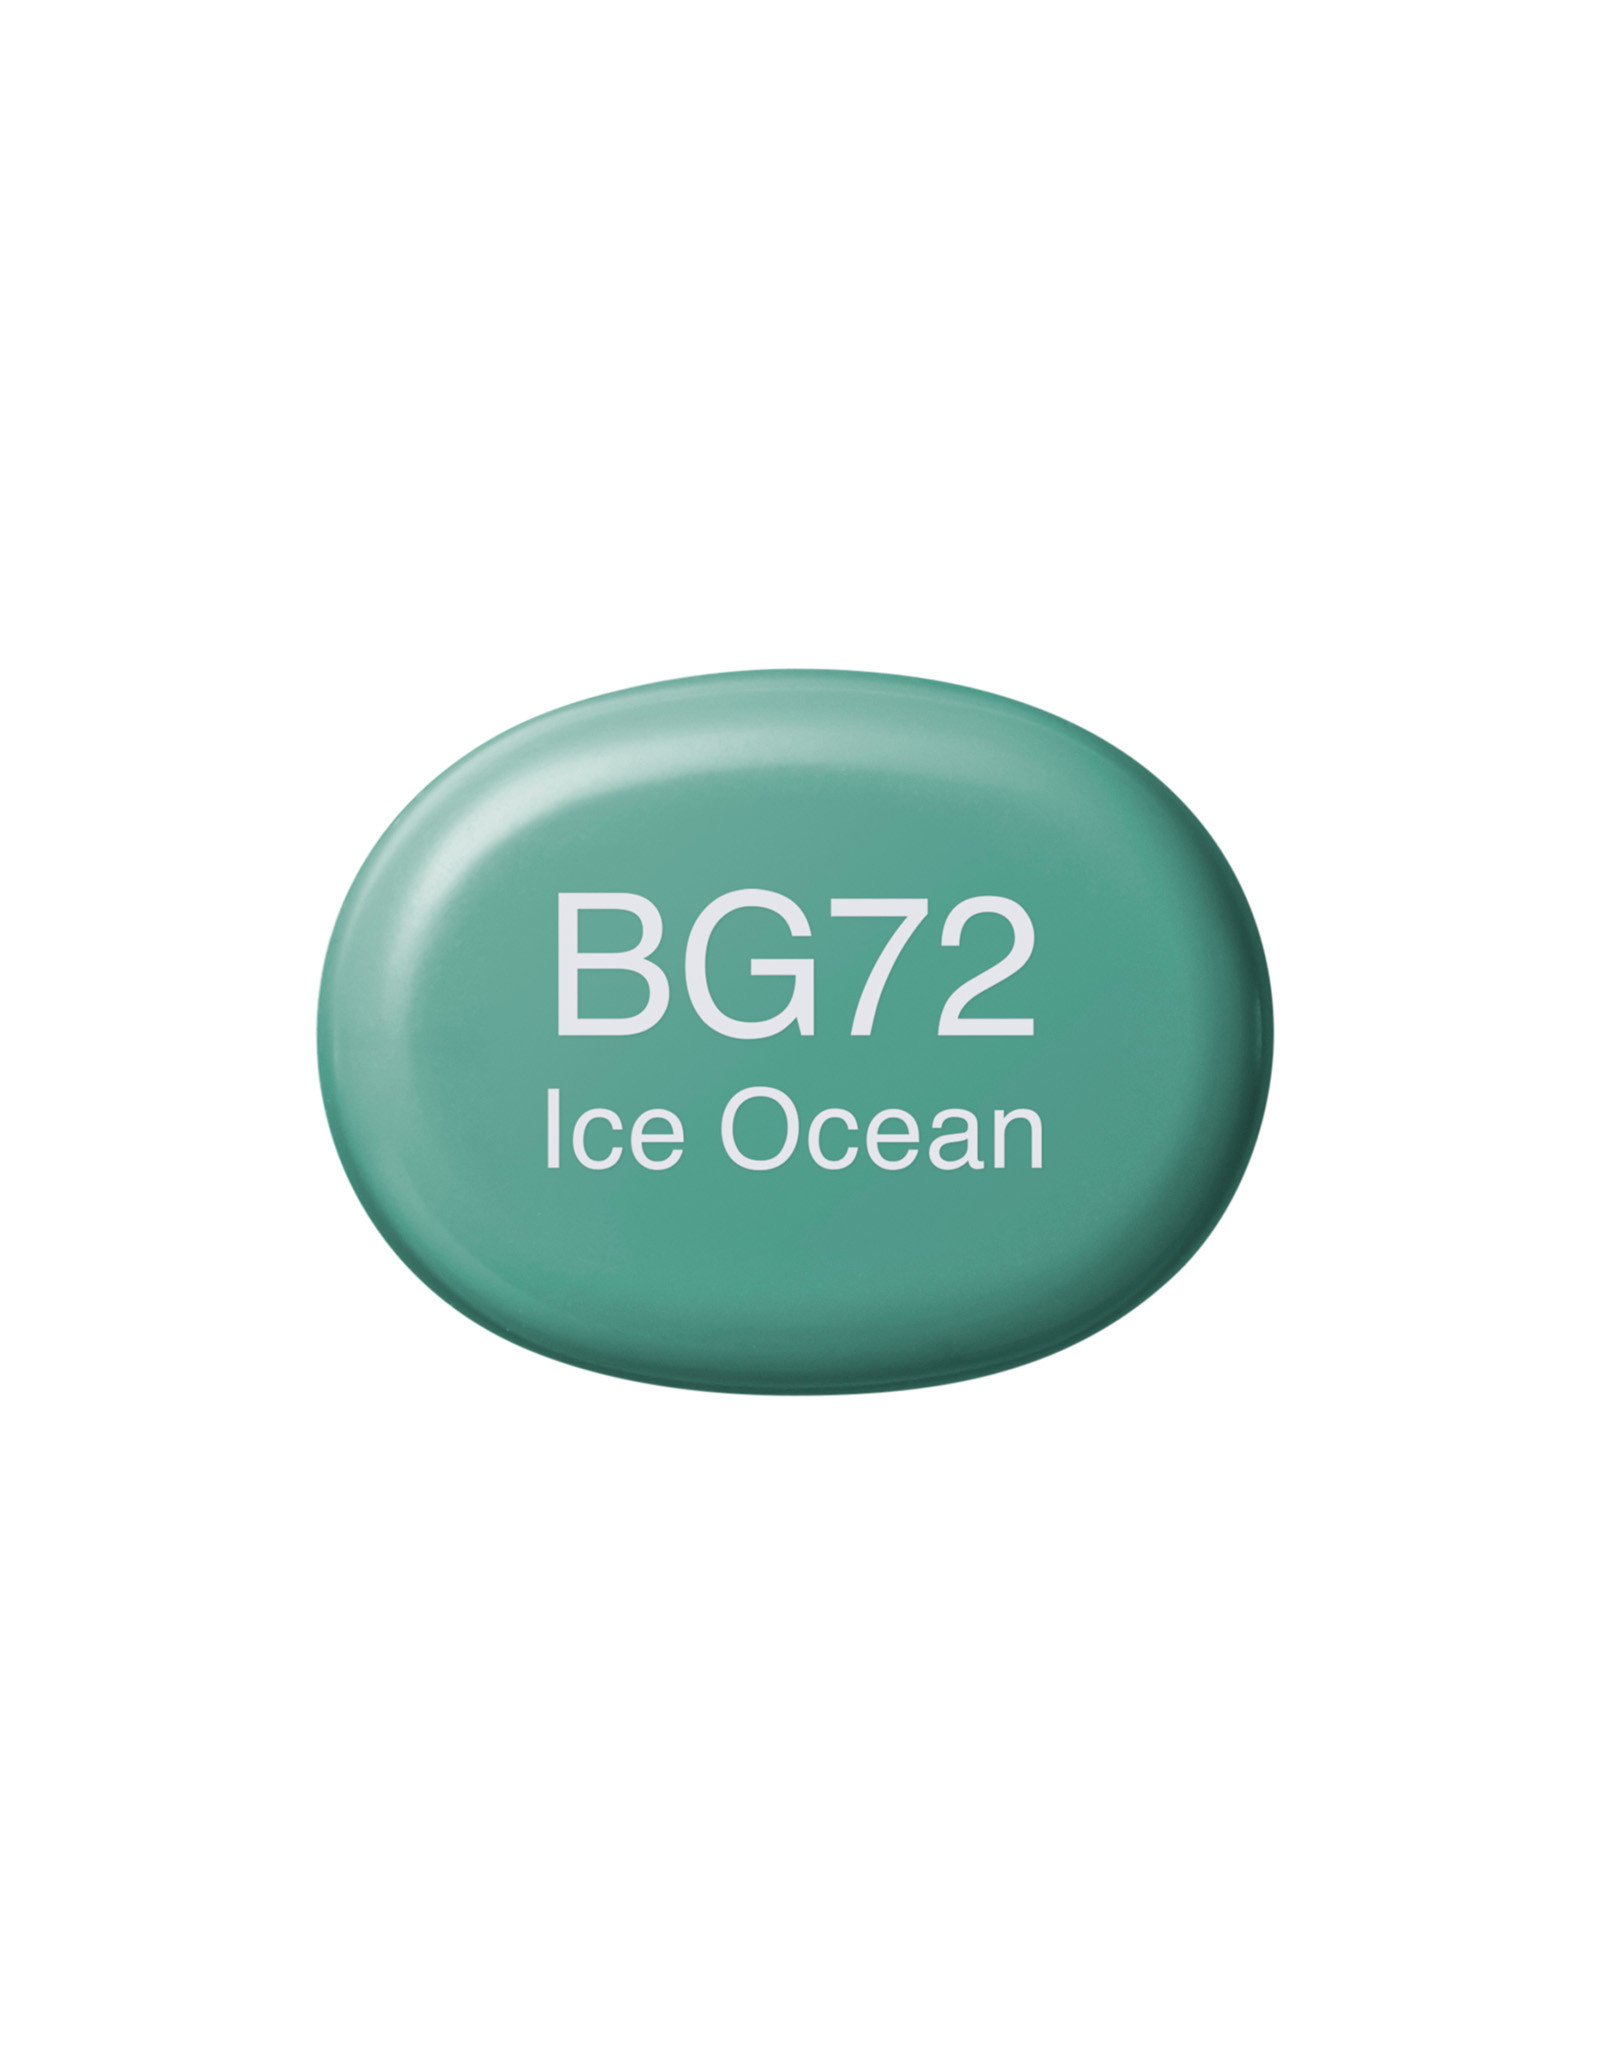 COPIC COPIC Sketch Marker BG72 Ice Ocean